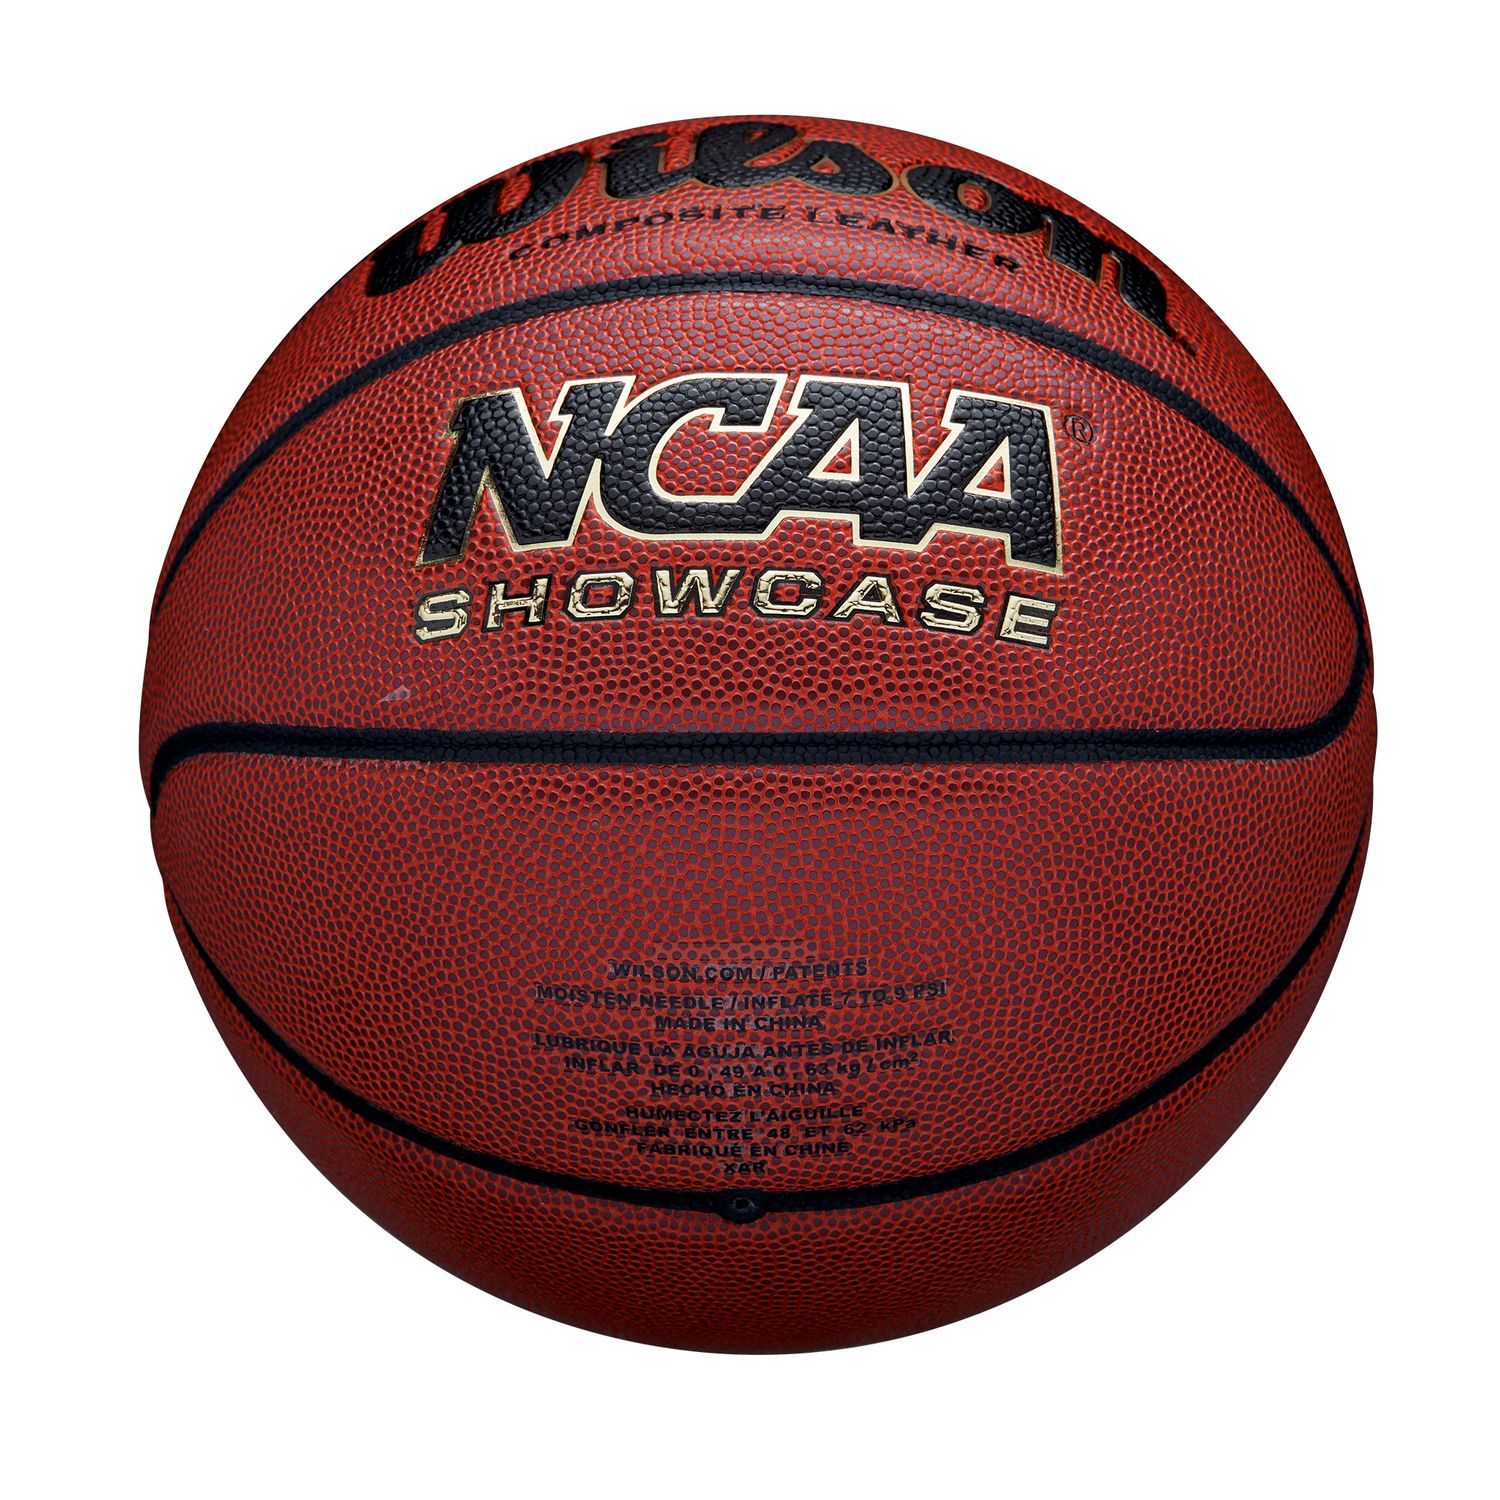 Wilson NCAA Showcase Basketball